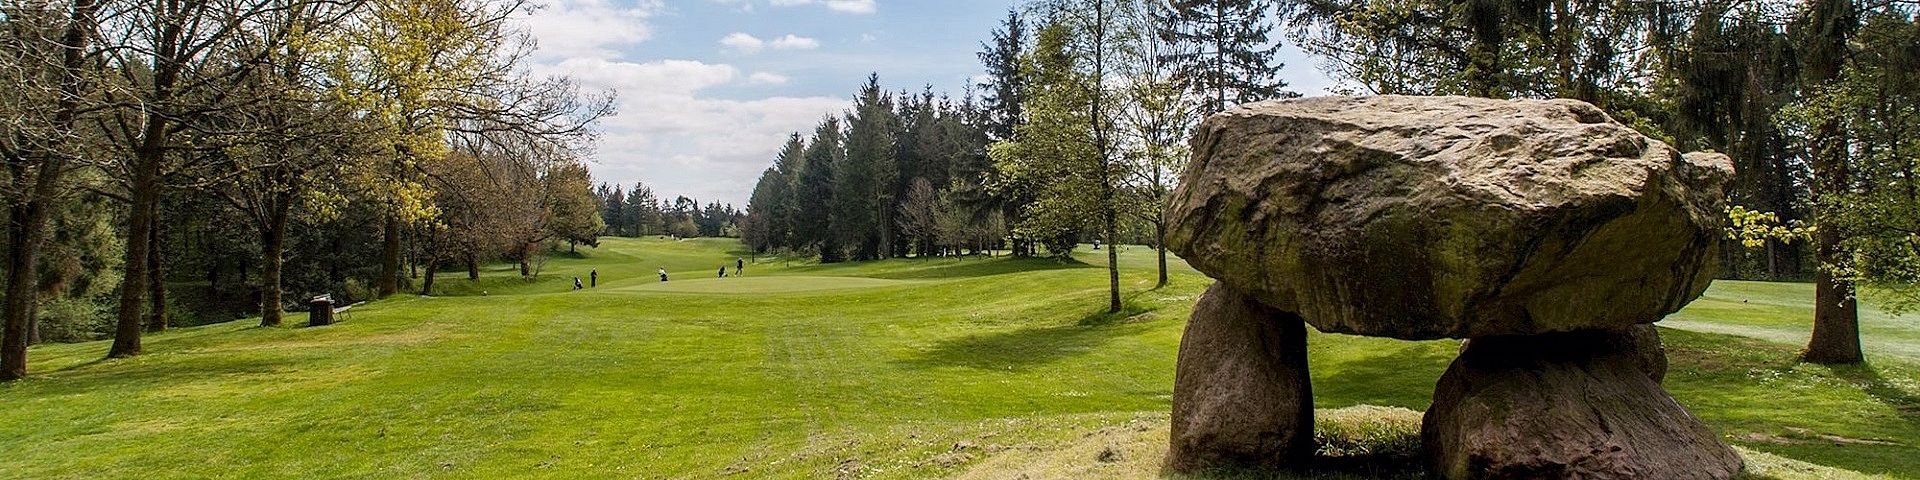 Sønderjyllands Golfklub